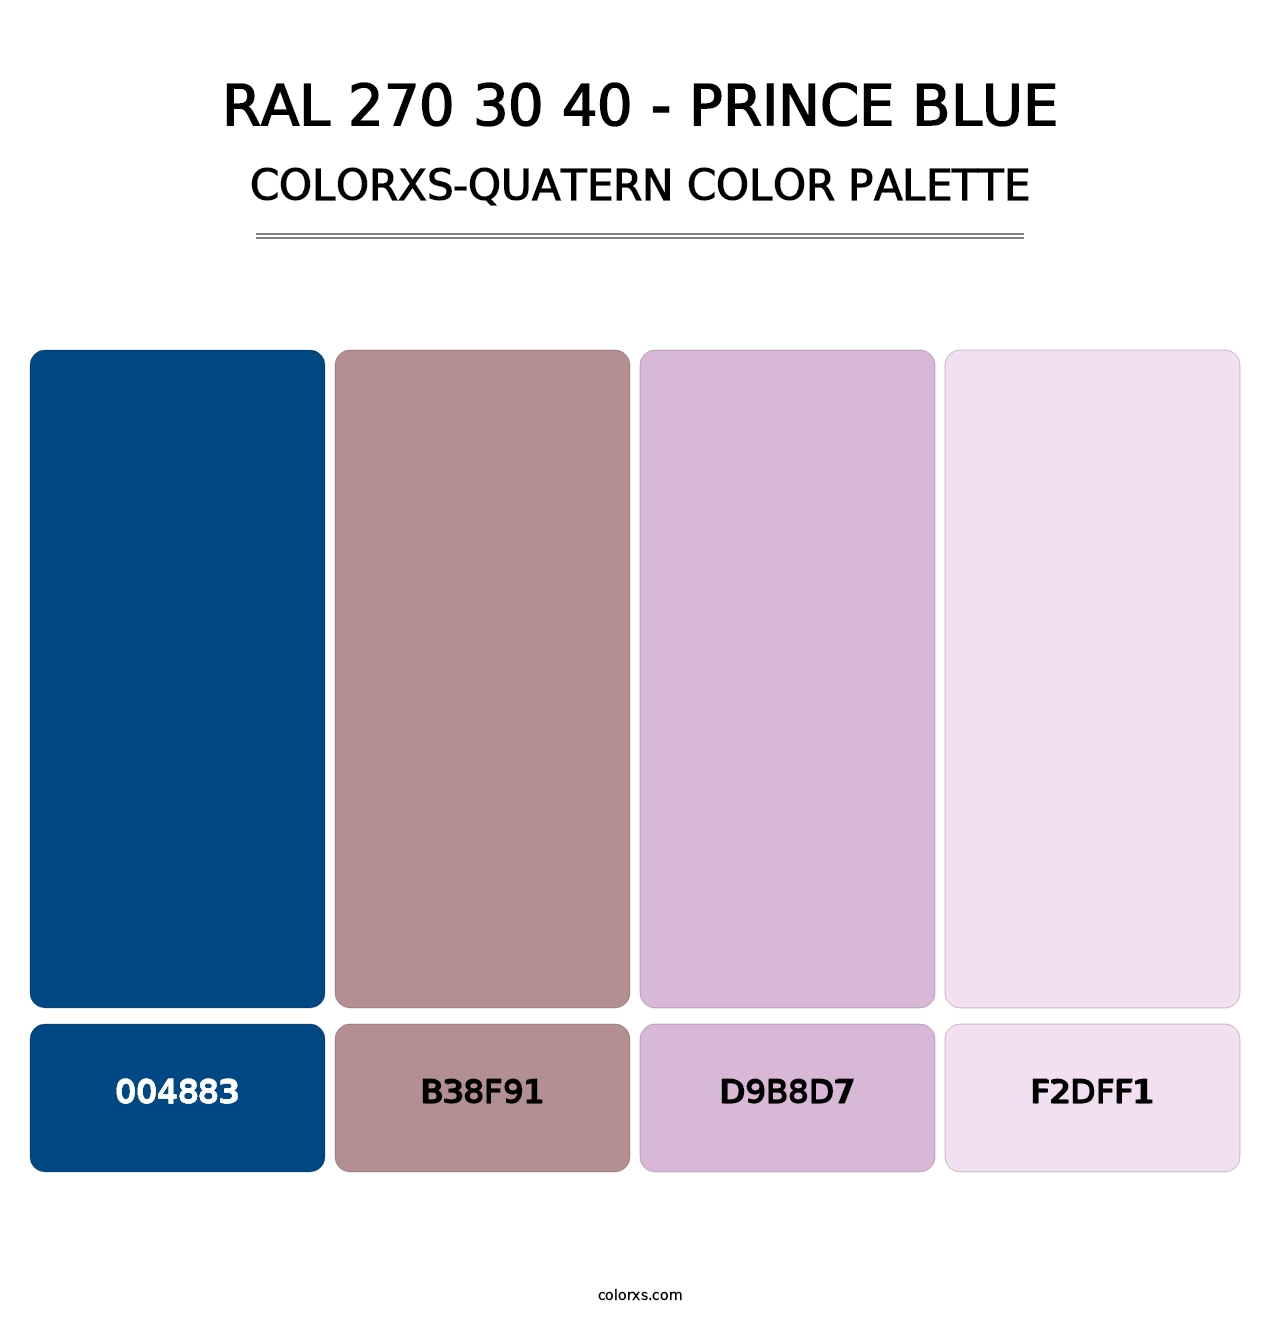 RAL 270 30 40 - Prince Blue - Colorxs Quatern Palette